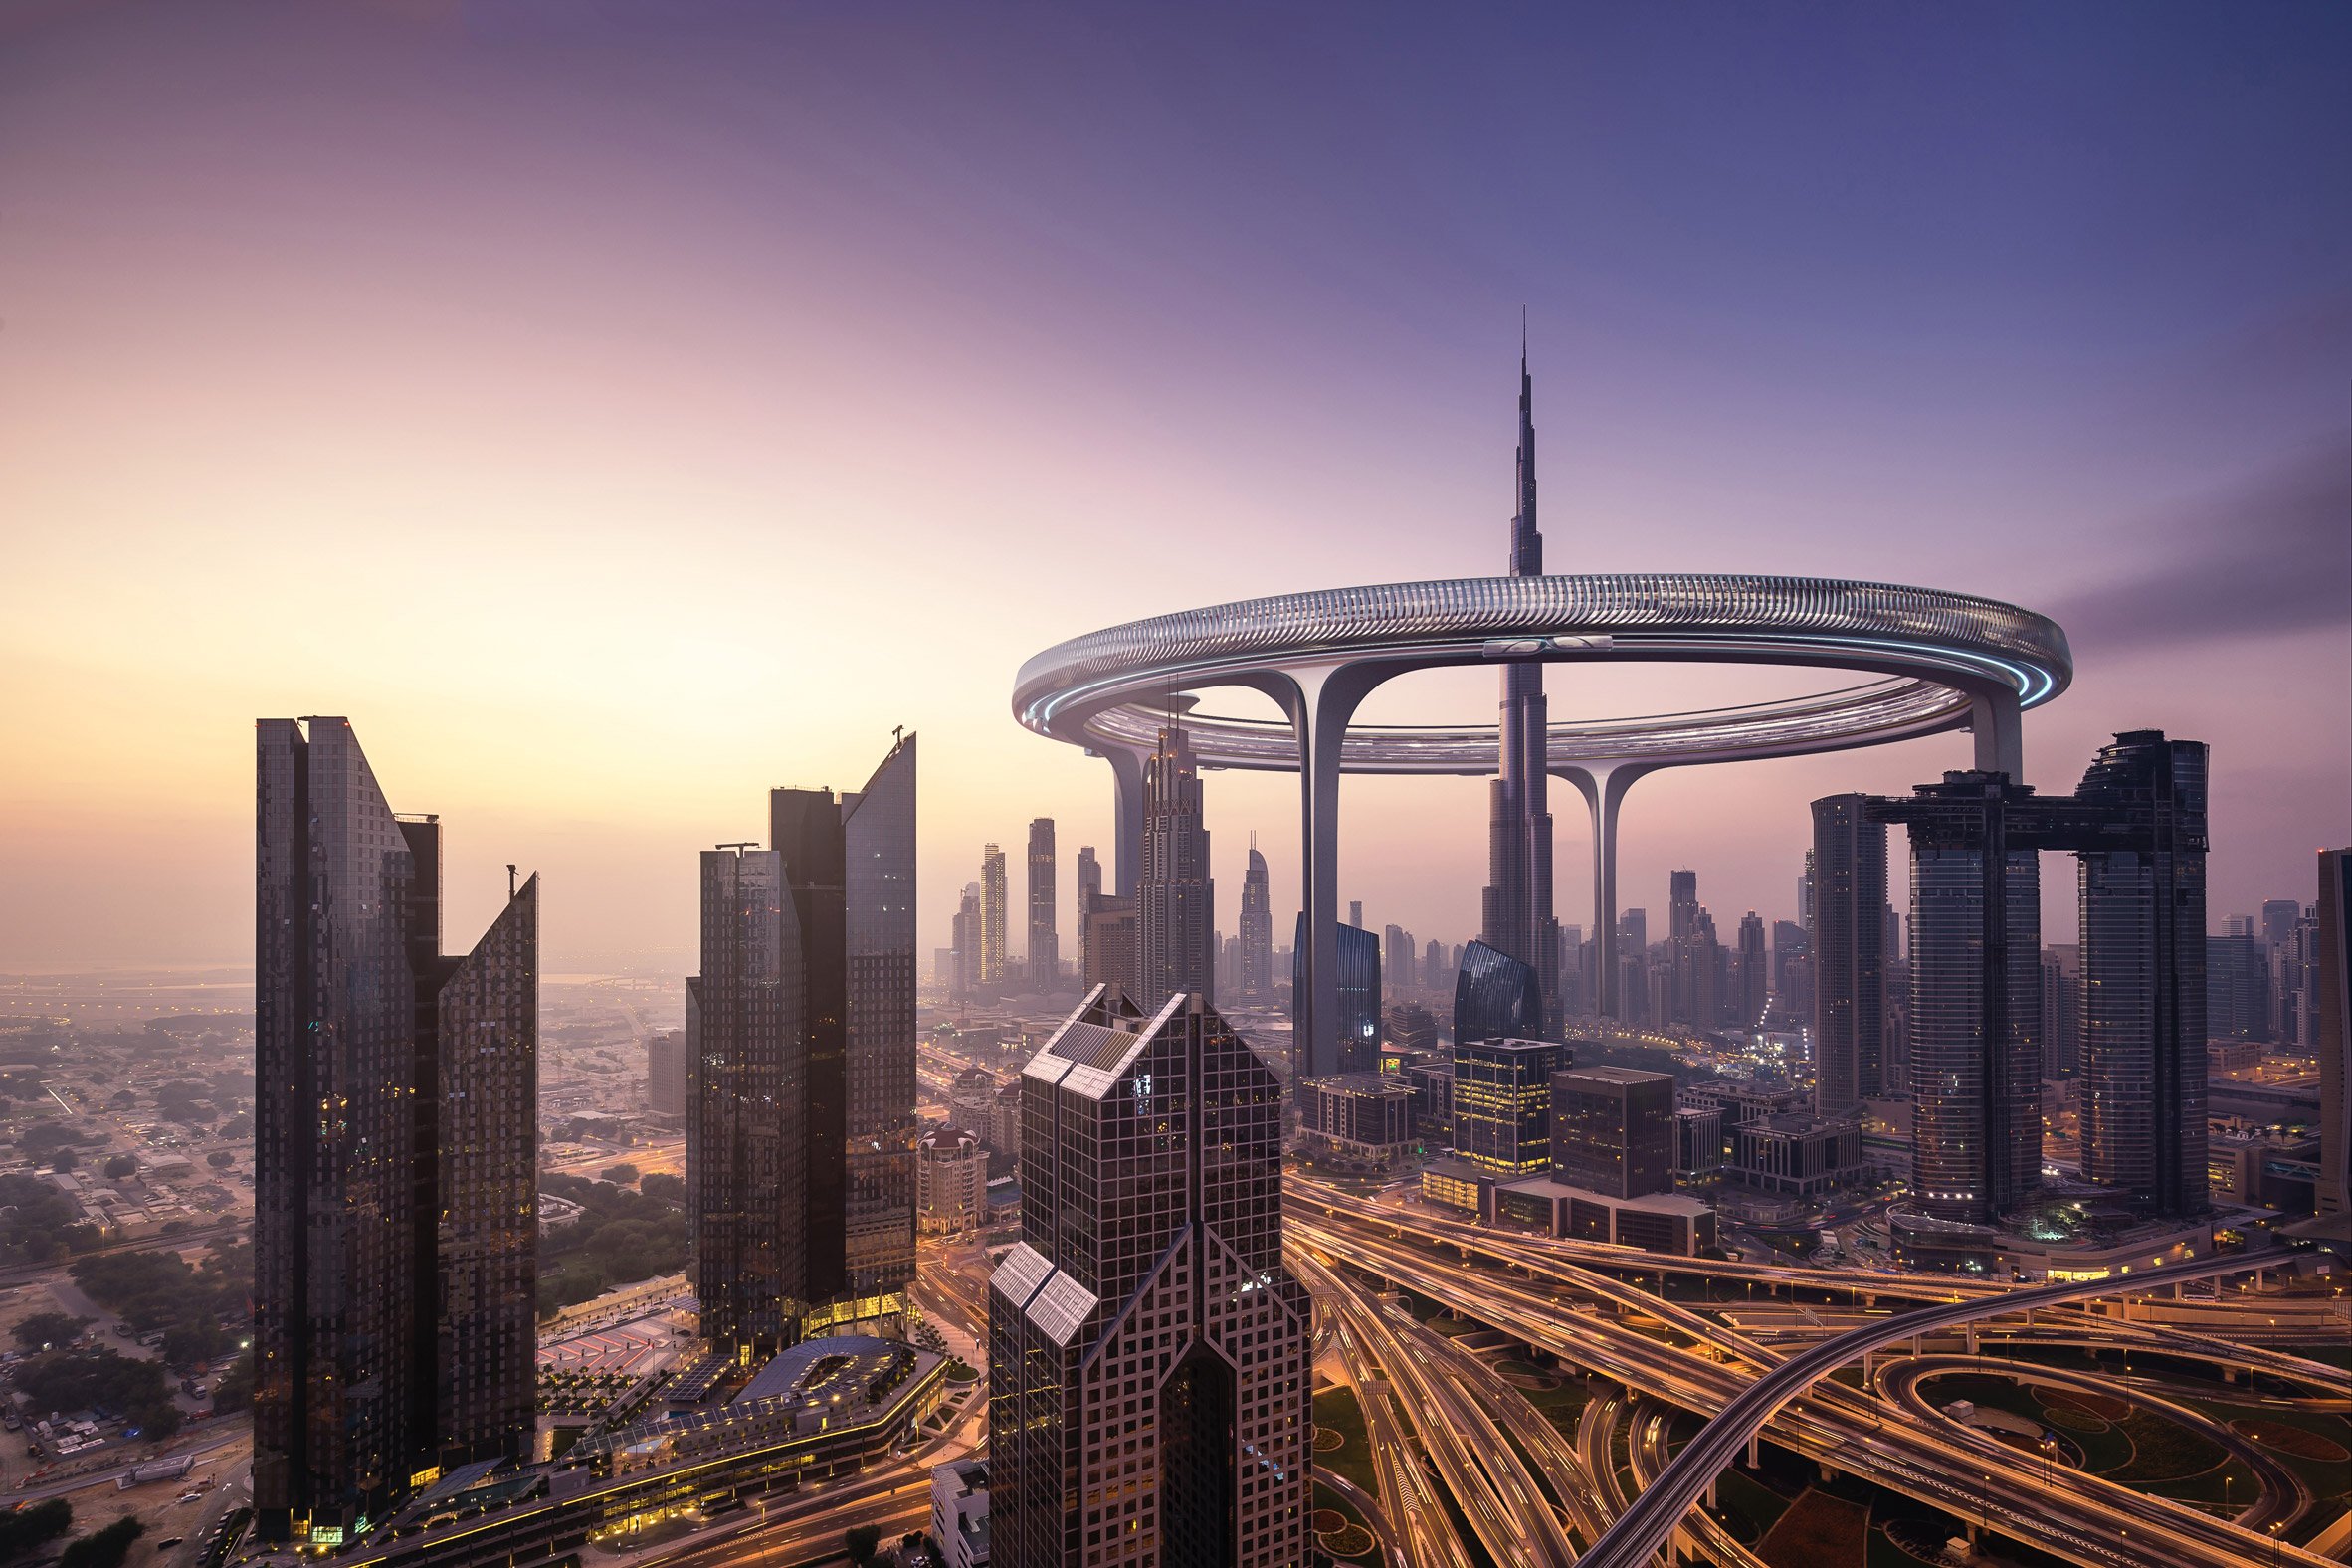 A rendering of a circular building in Dubai